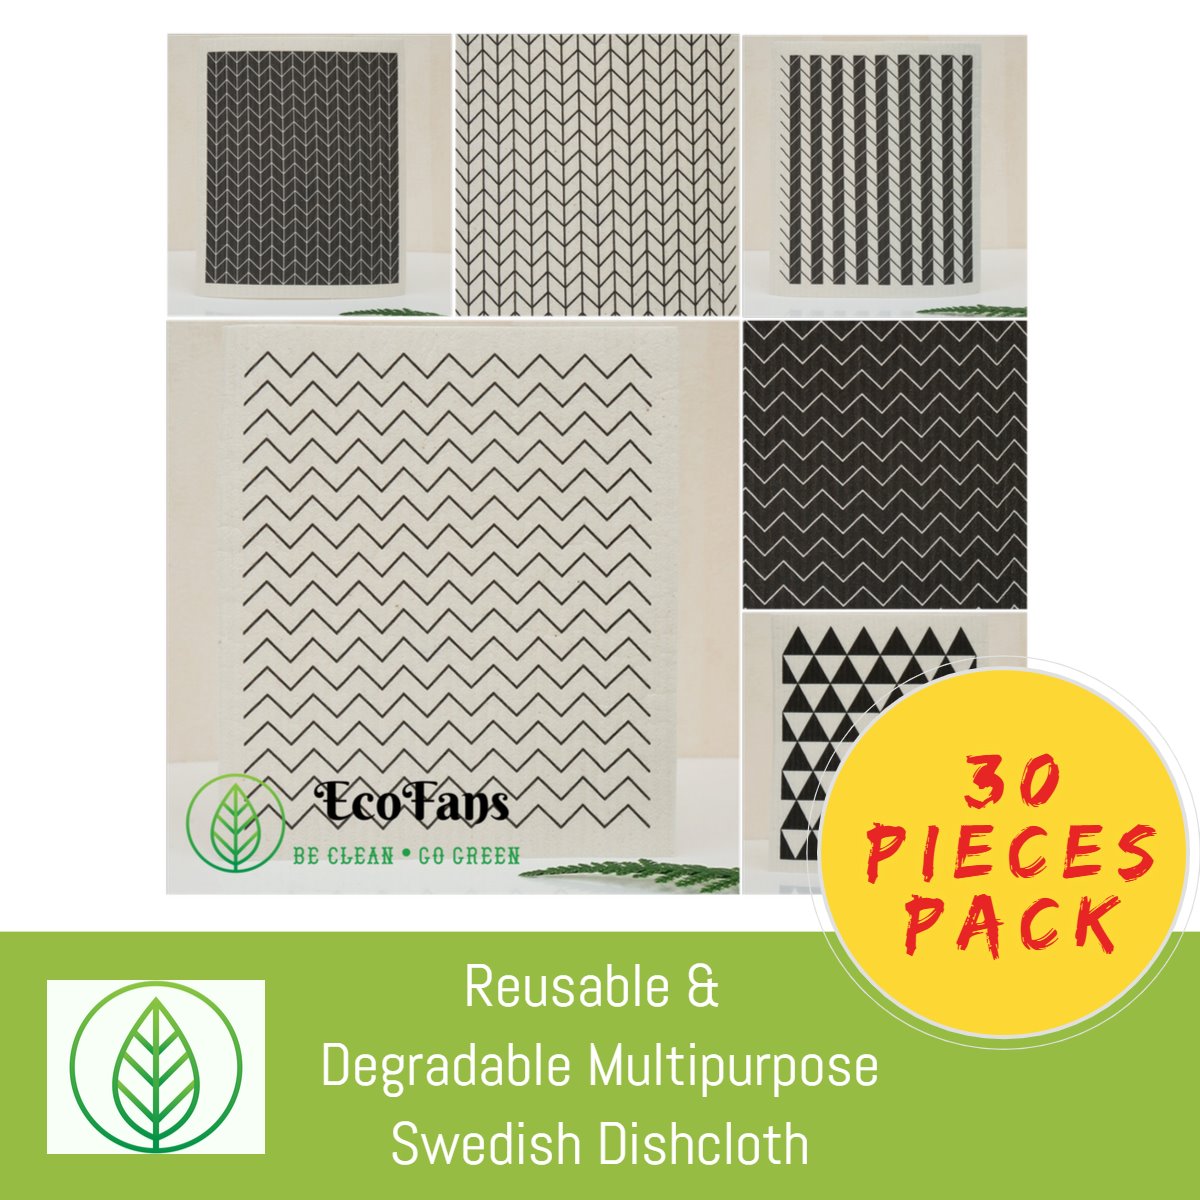 KT051-X-30-Reusable & Degradable Multipurpose Swedish Dishcloth-Cloth-ecofans-30-Tiles-